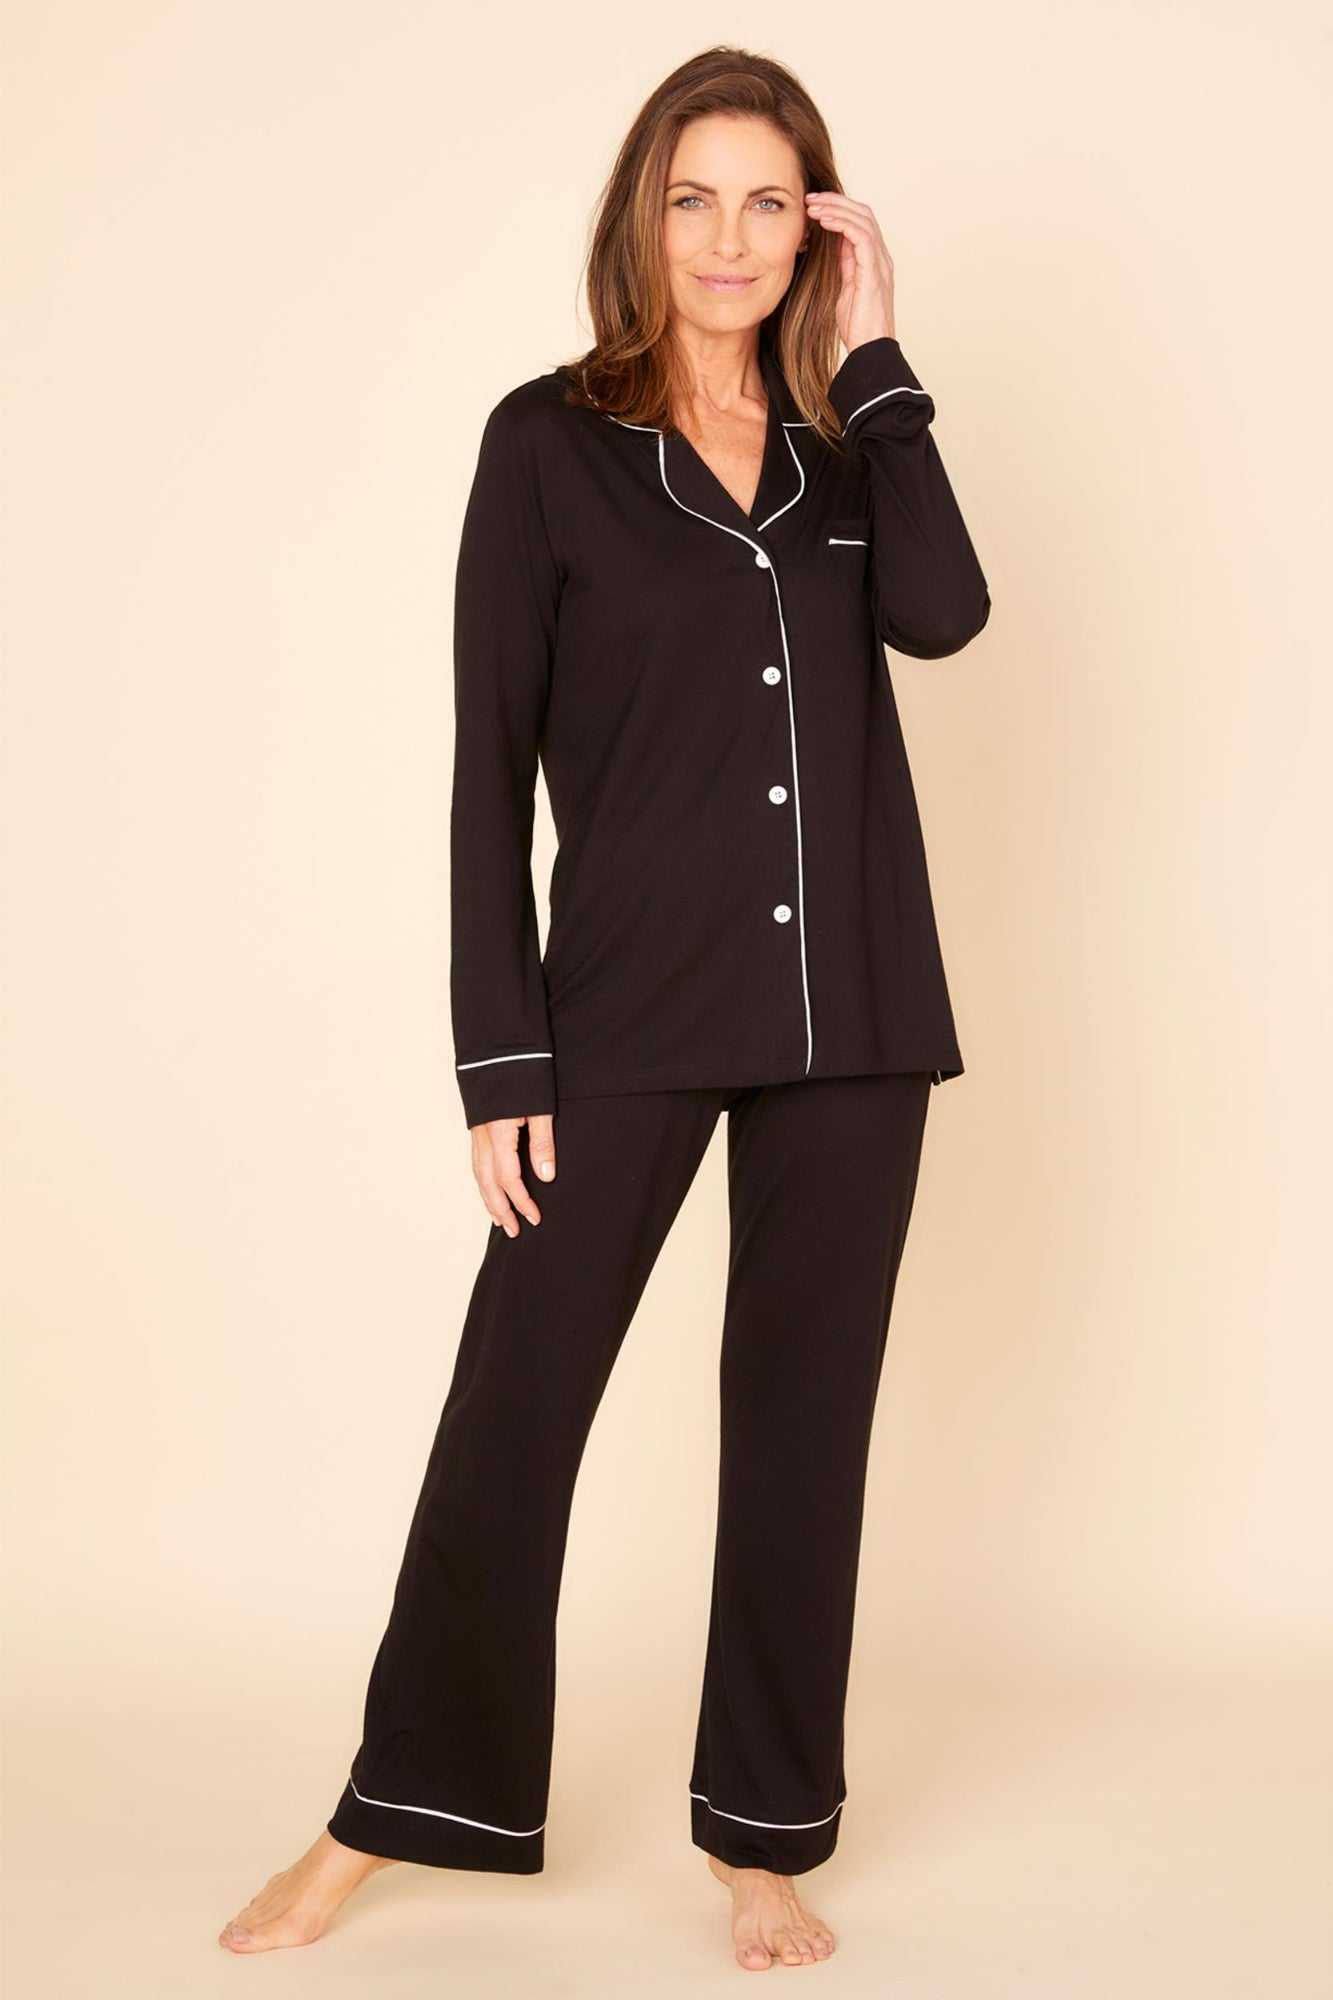 Cosabella Women's Bella Long Sleeve Top & Pant Pajama Set Pajama, Black, 2x Size, Cotton Modal Set